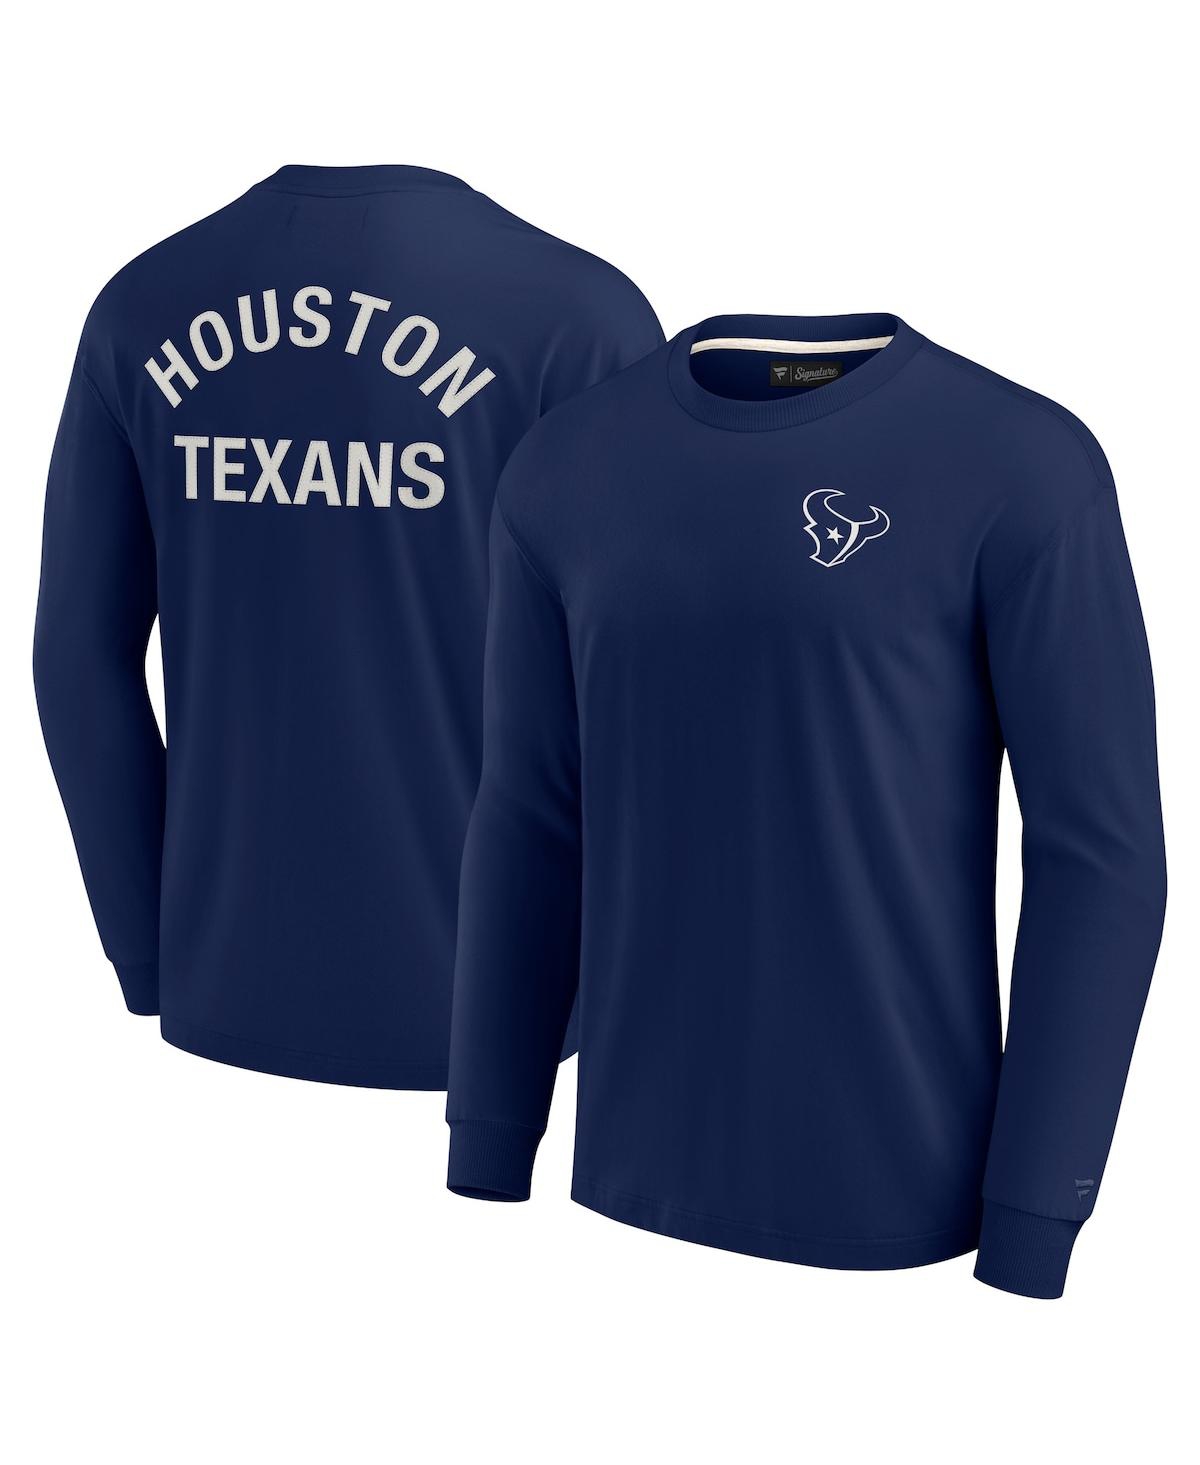 Men's and Women's Fanatics Signature Navy Houston Texans Super Soft Long Sleeve T-shirt - Navy